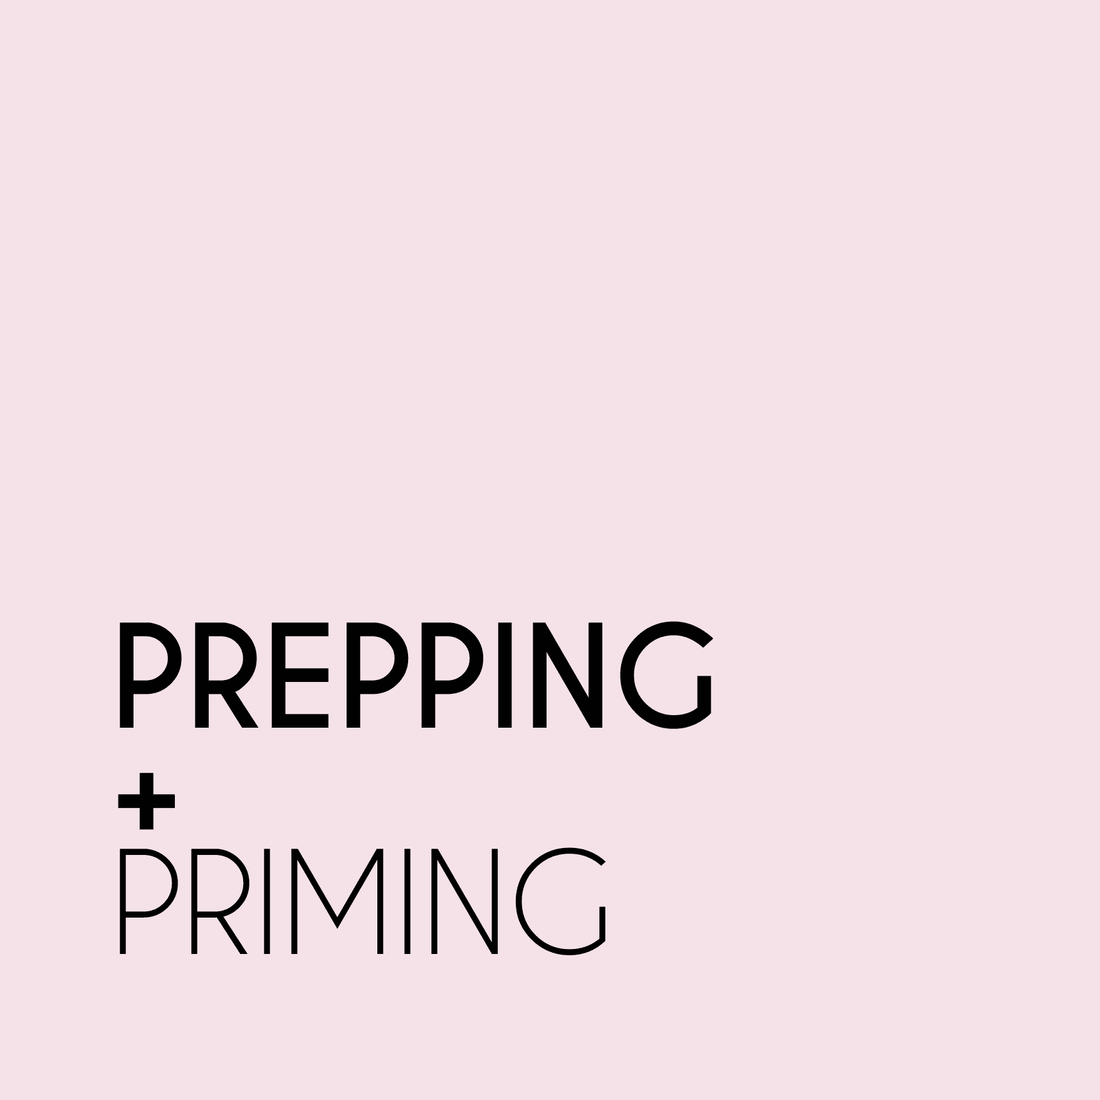 Preping and Priming